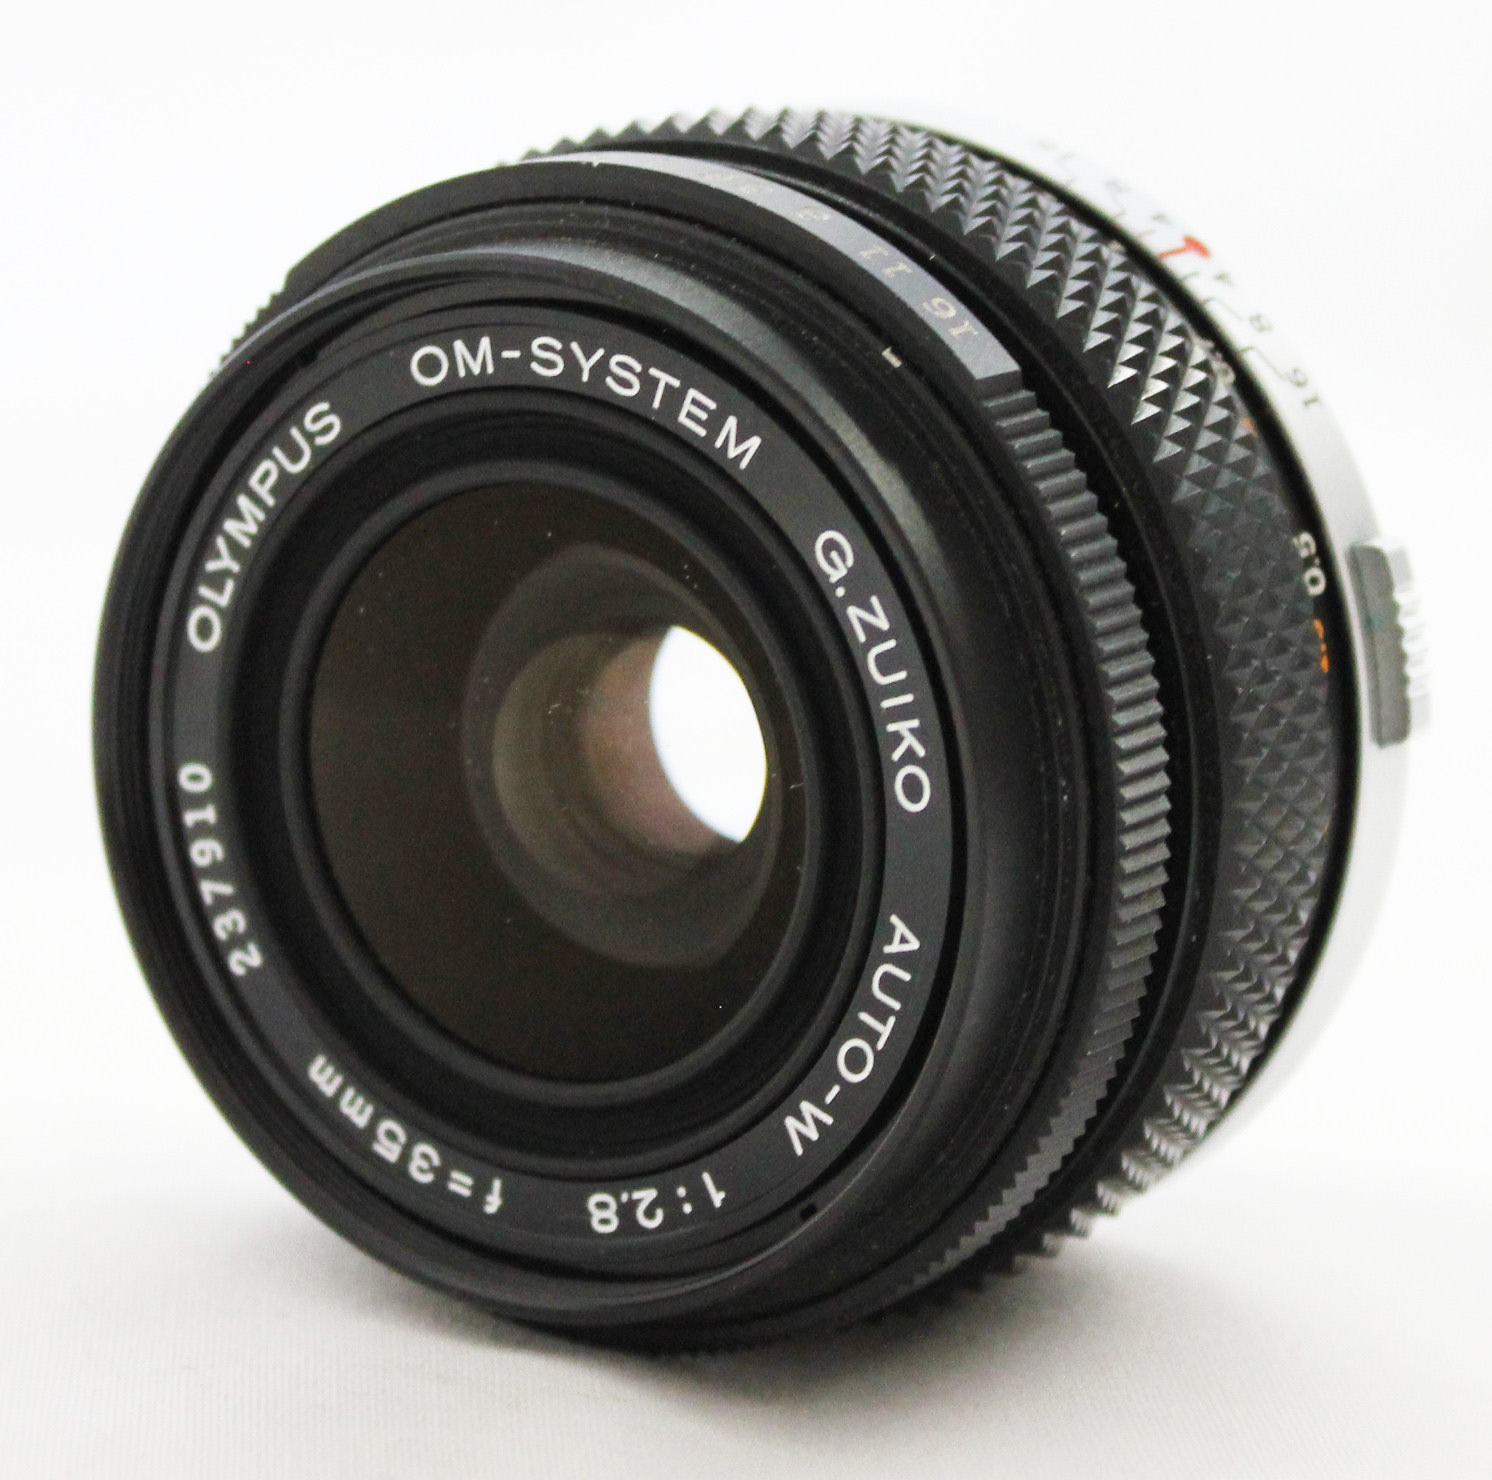 Olympus OM-System G.Zuiko Auto-W 35mm F/2.8 MF Lens from Japan (C1362